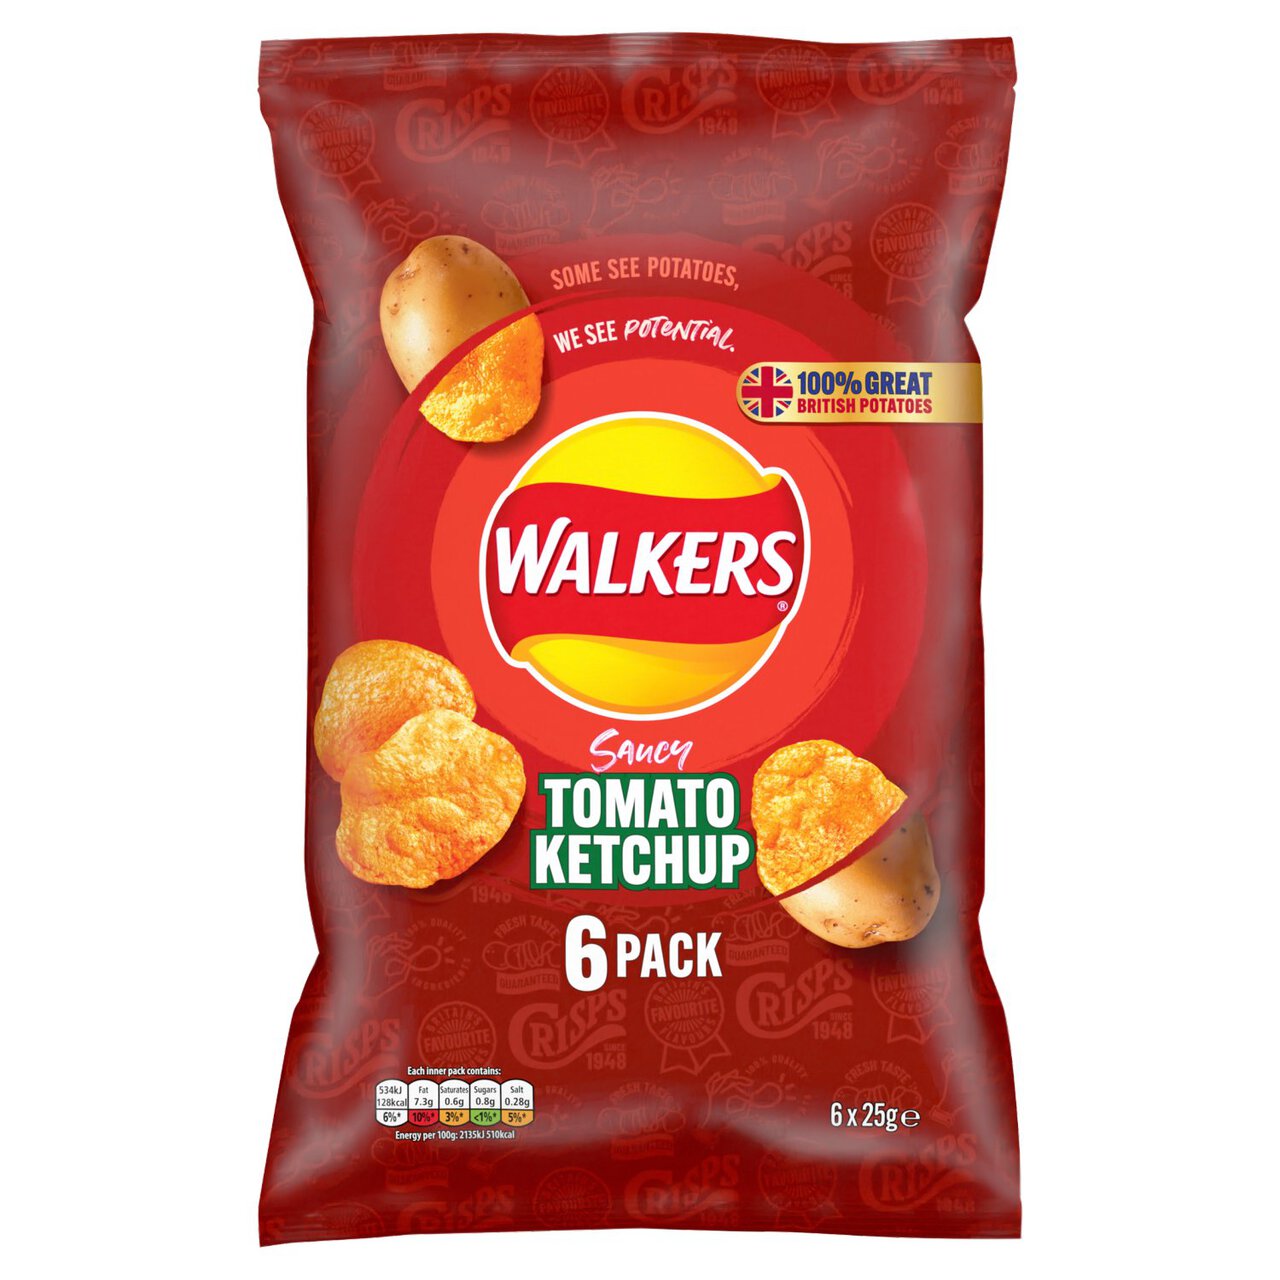 Walkers Tomato Ketchup Multipack Crisps 6 per pack